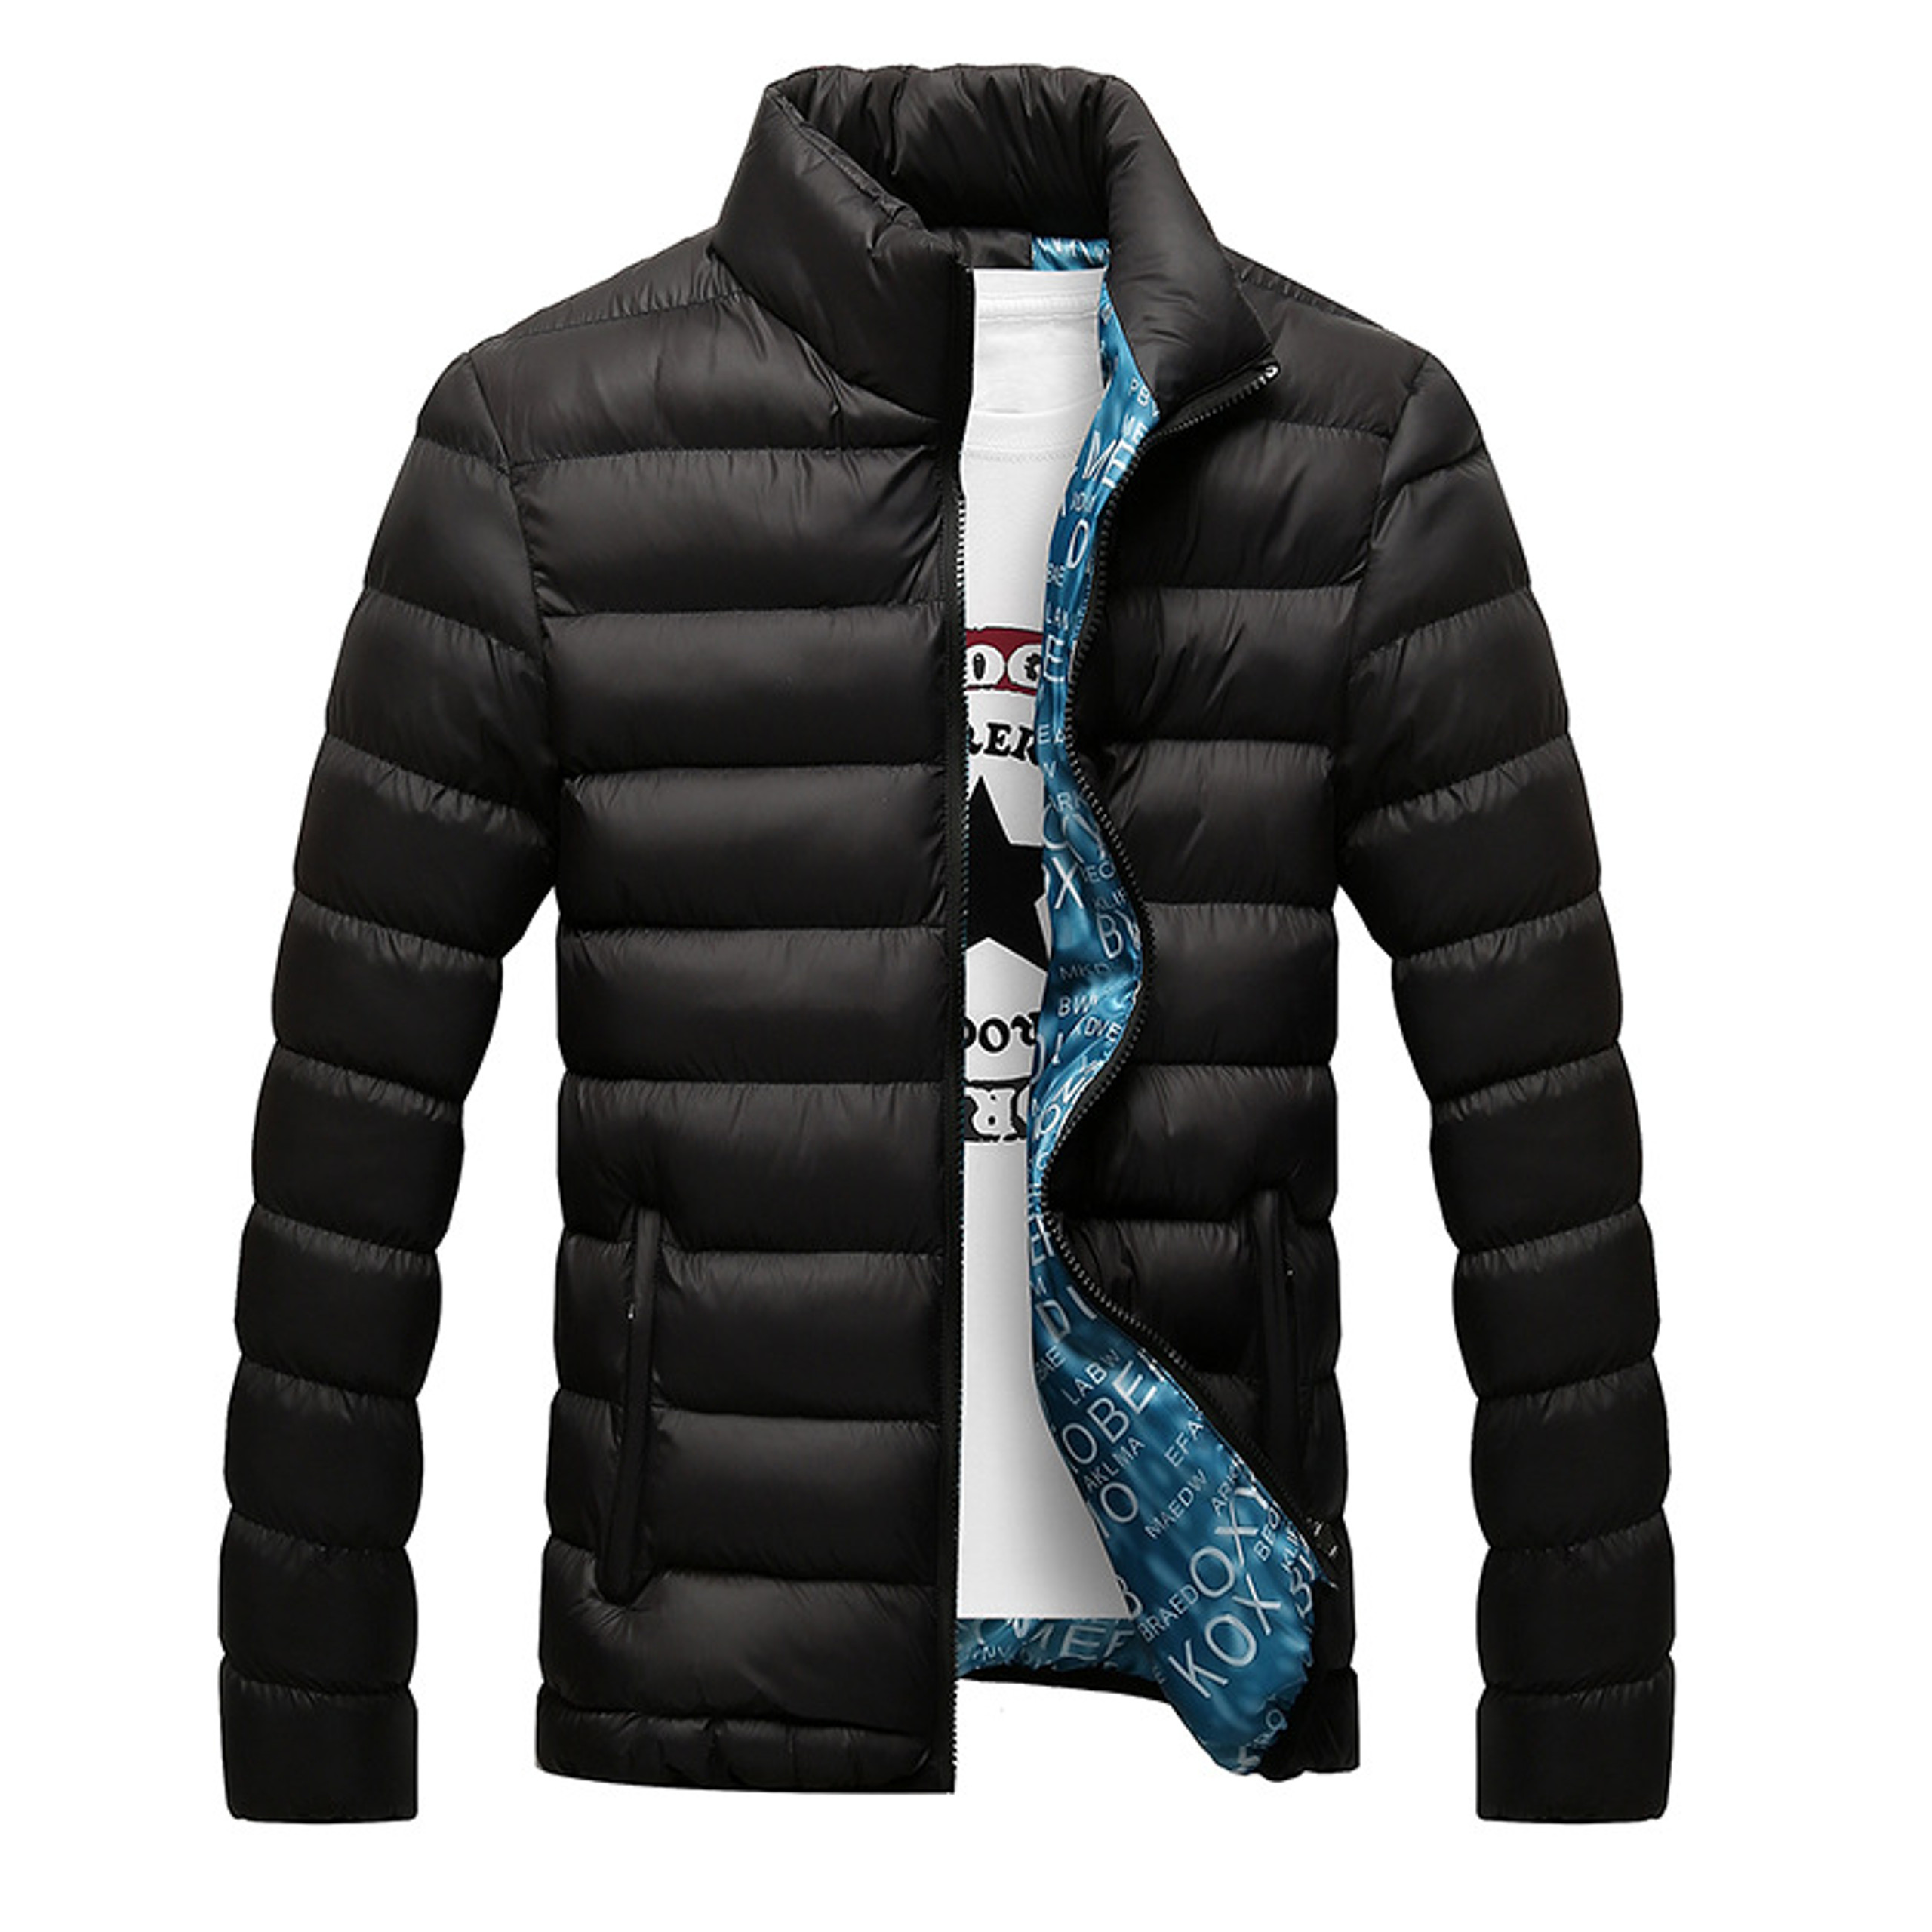 WEBONTINAL Hot Sale 2017 Winter Jacket Men Jackets Male Hooded Coats ...